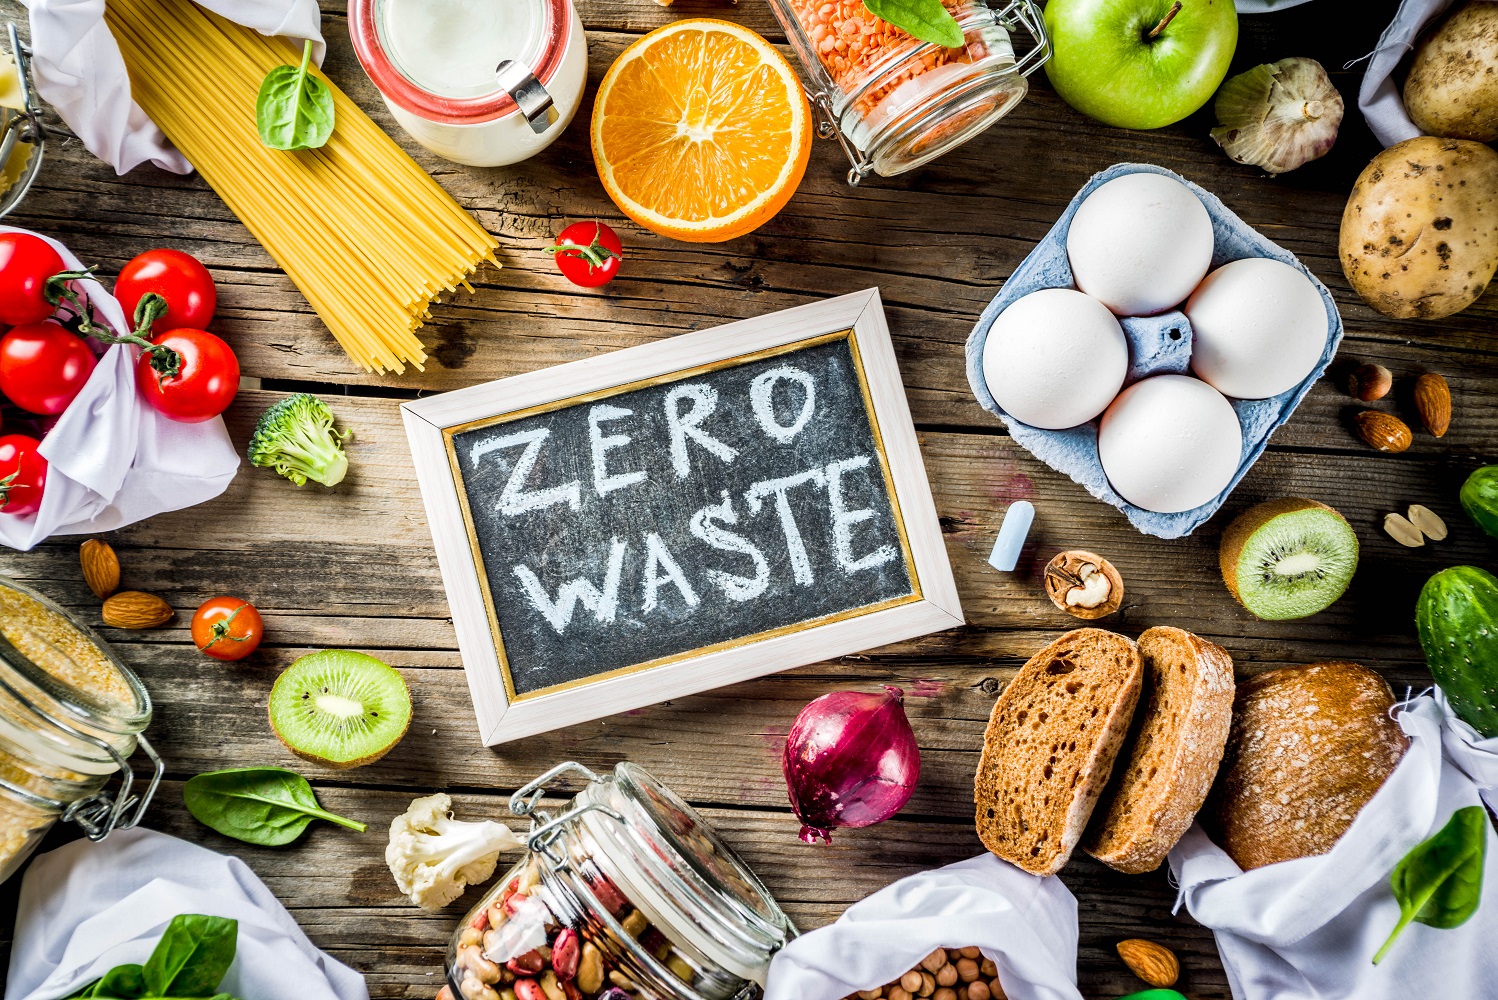 How a Food Waste Separator Makes Disposing of Leftover Food Easier